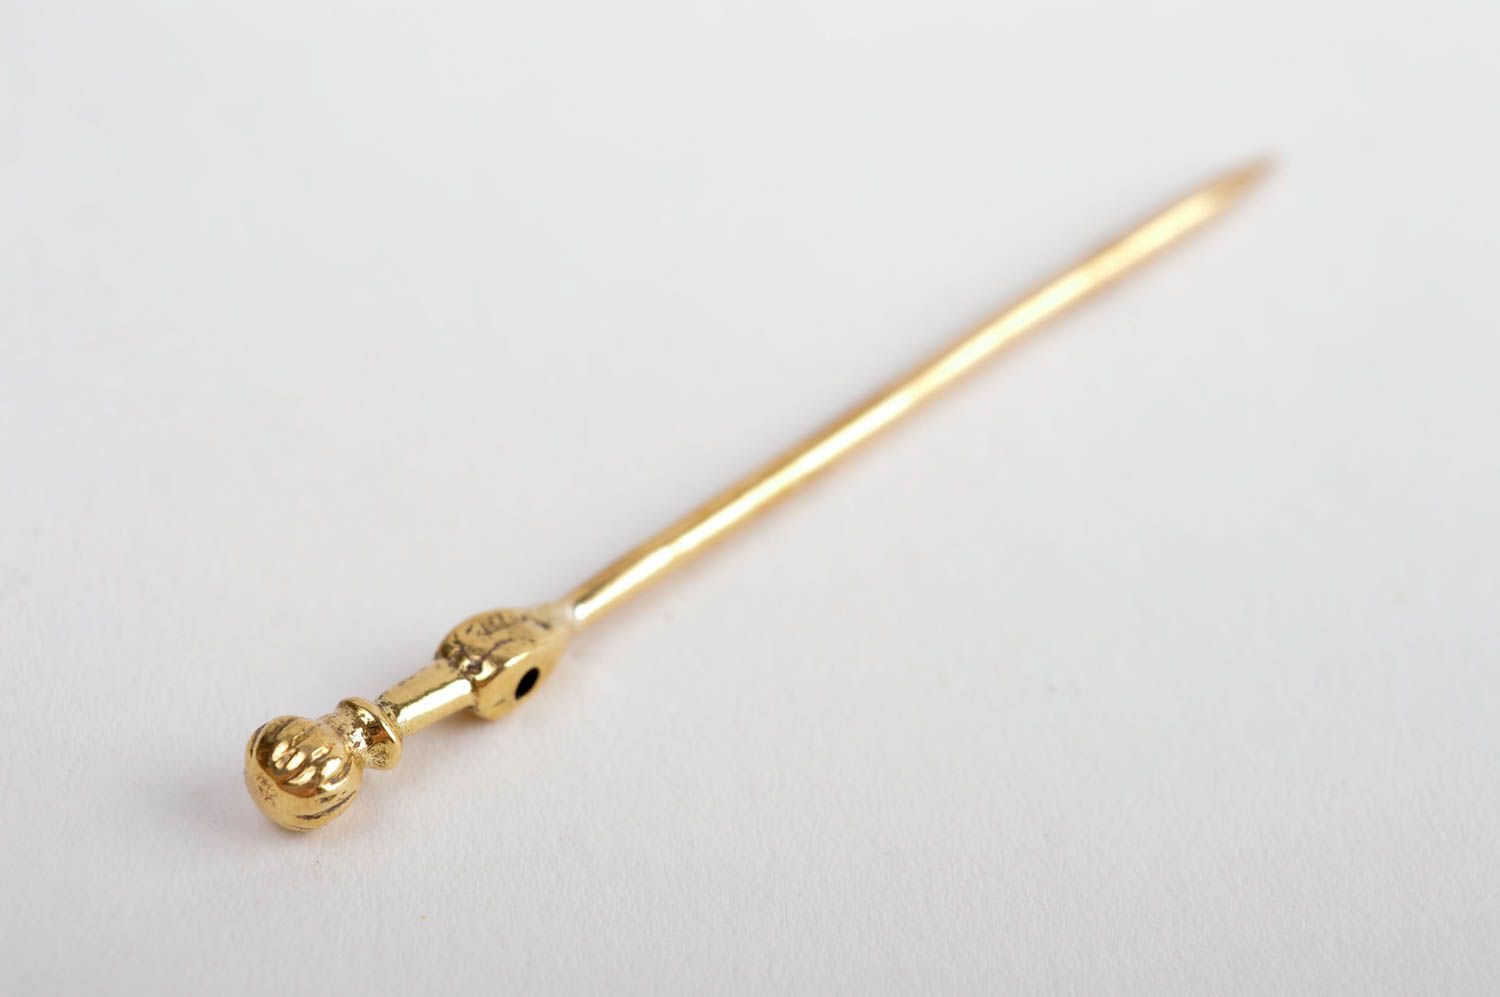 Hair chopstick metal jewelry handmade hair accessories hair pins gifts for women photo 4